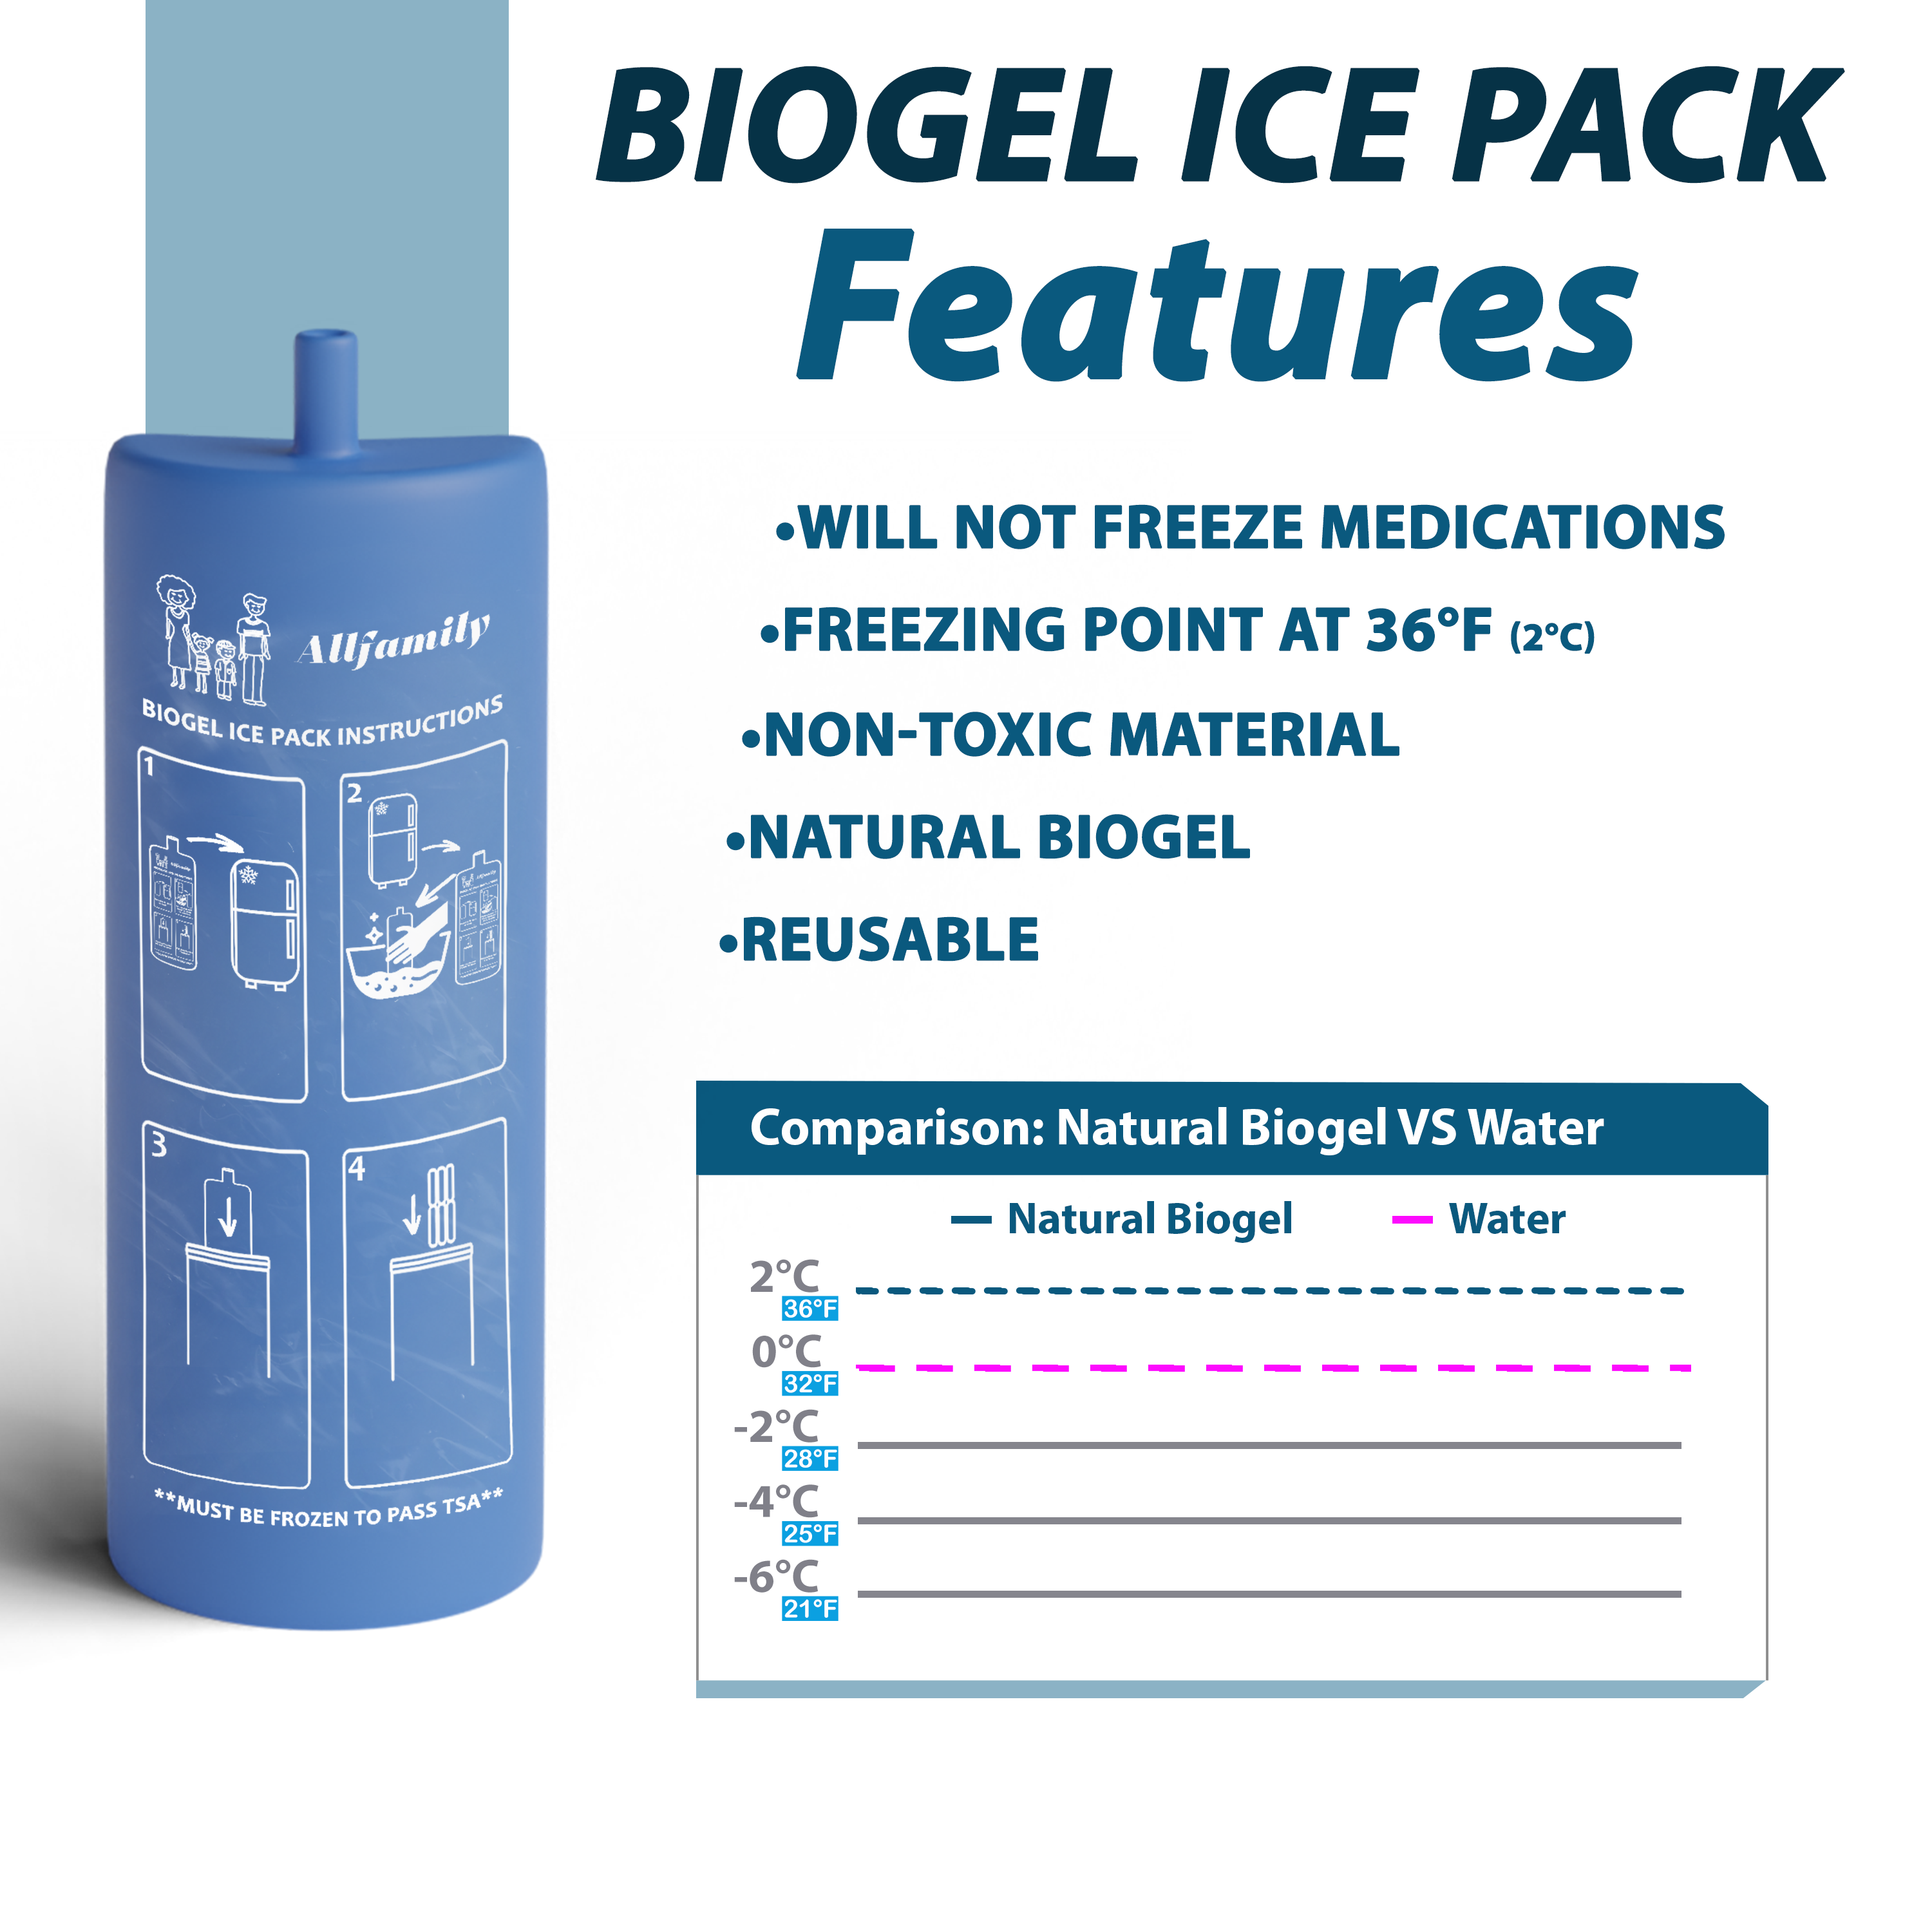 Ice Buddy Cooler/Freezer Packs